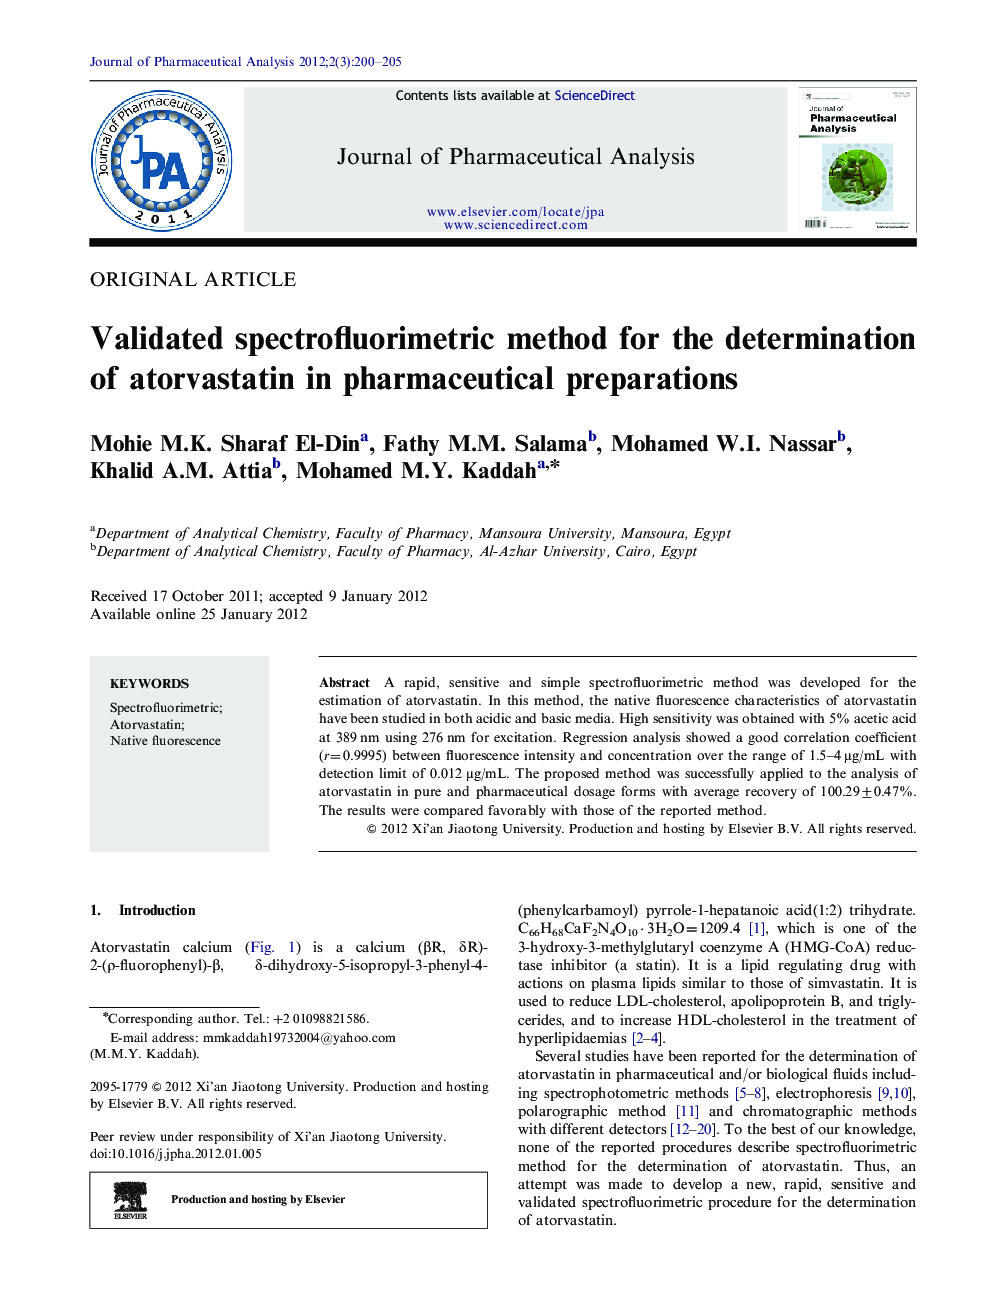 Validated spectrofluorimetric method for the determination of atorvastatin in pharmaceutical preparations